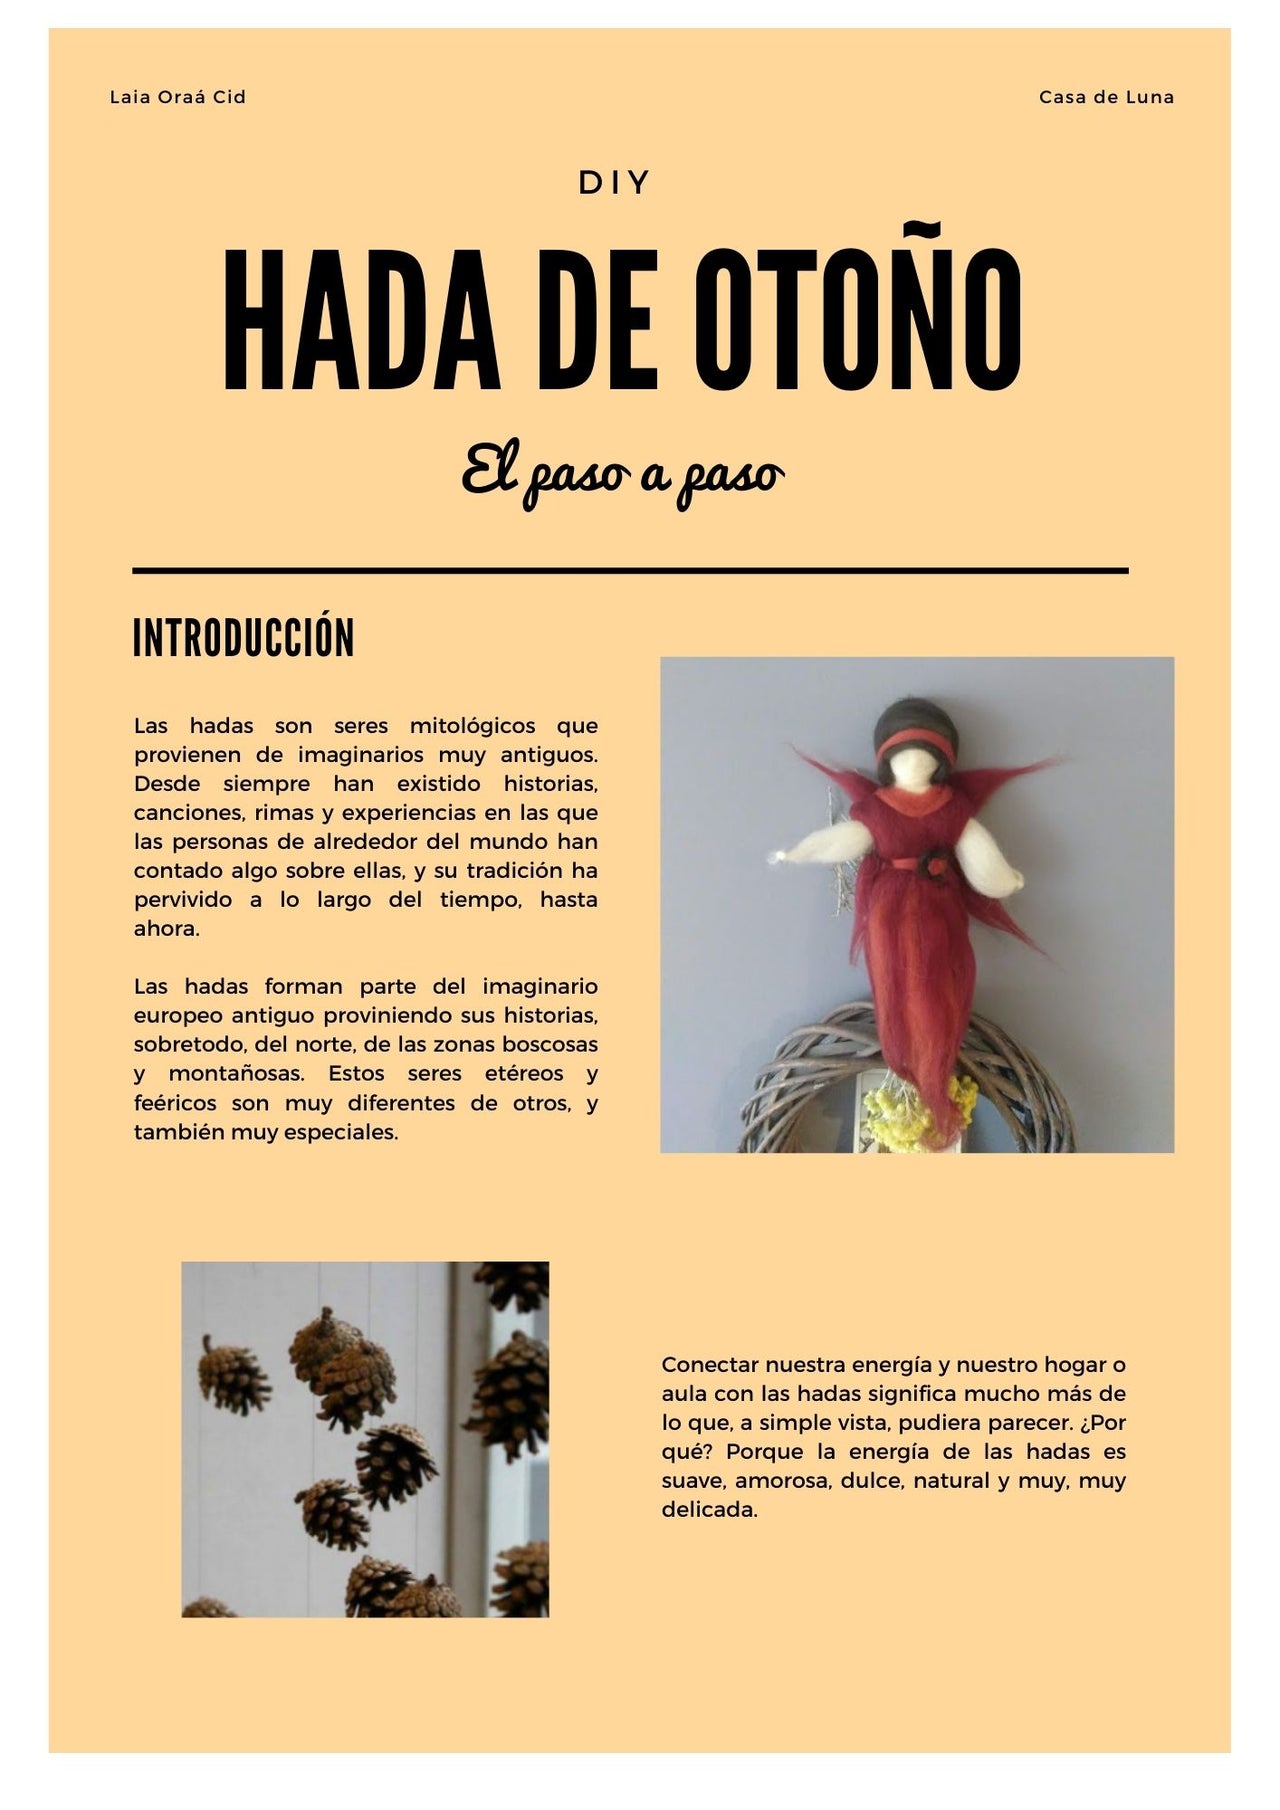 E-guía "DIY Hada de otoño"